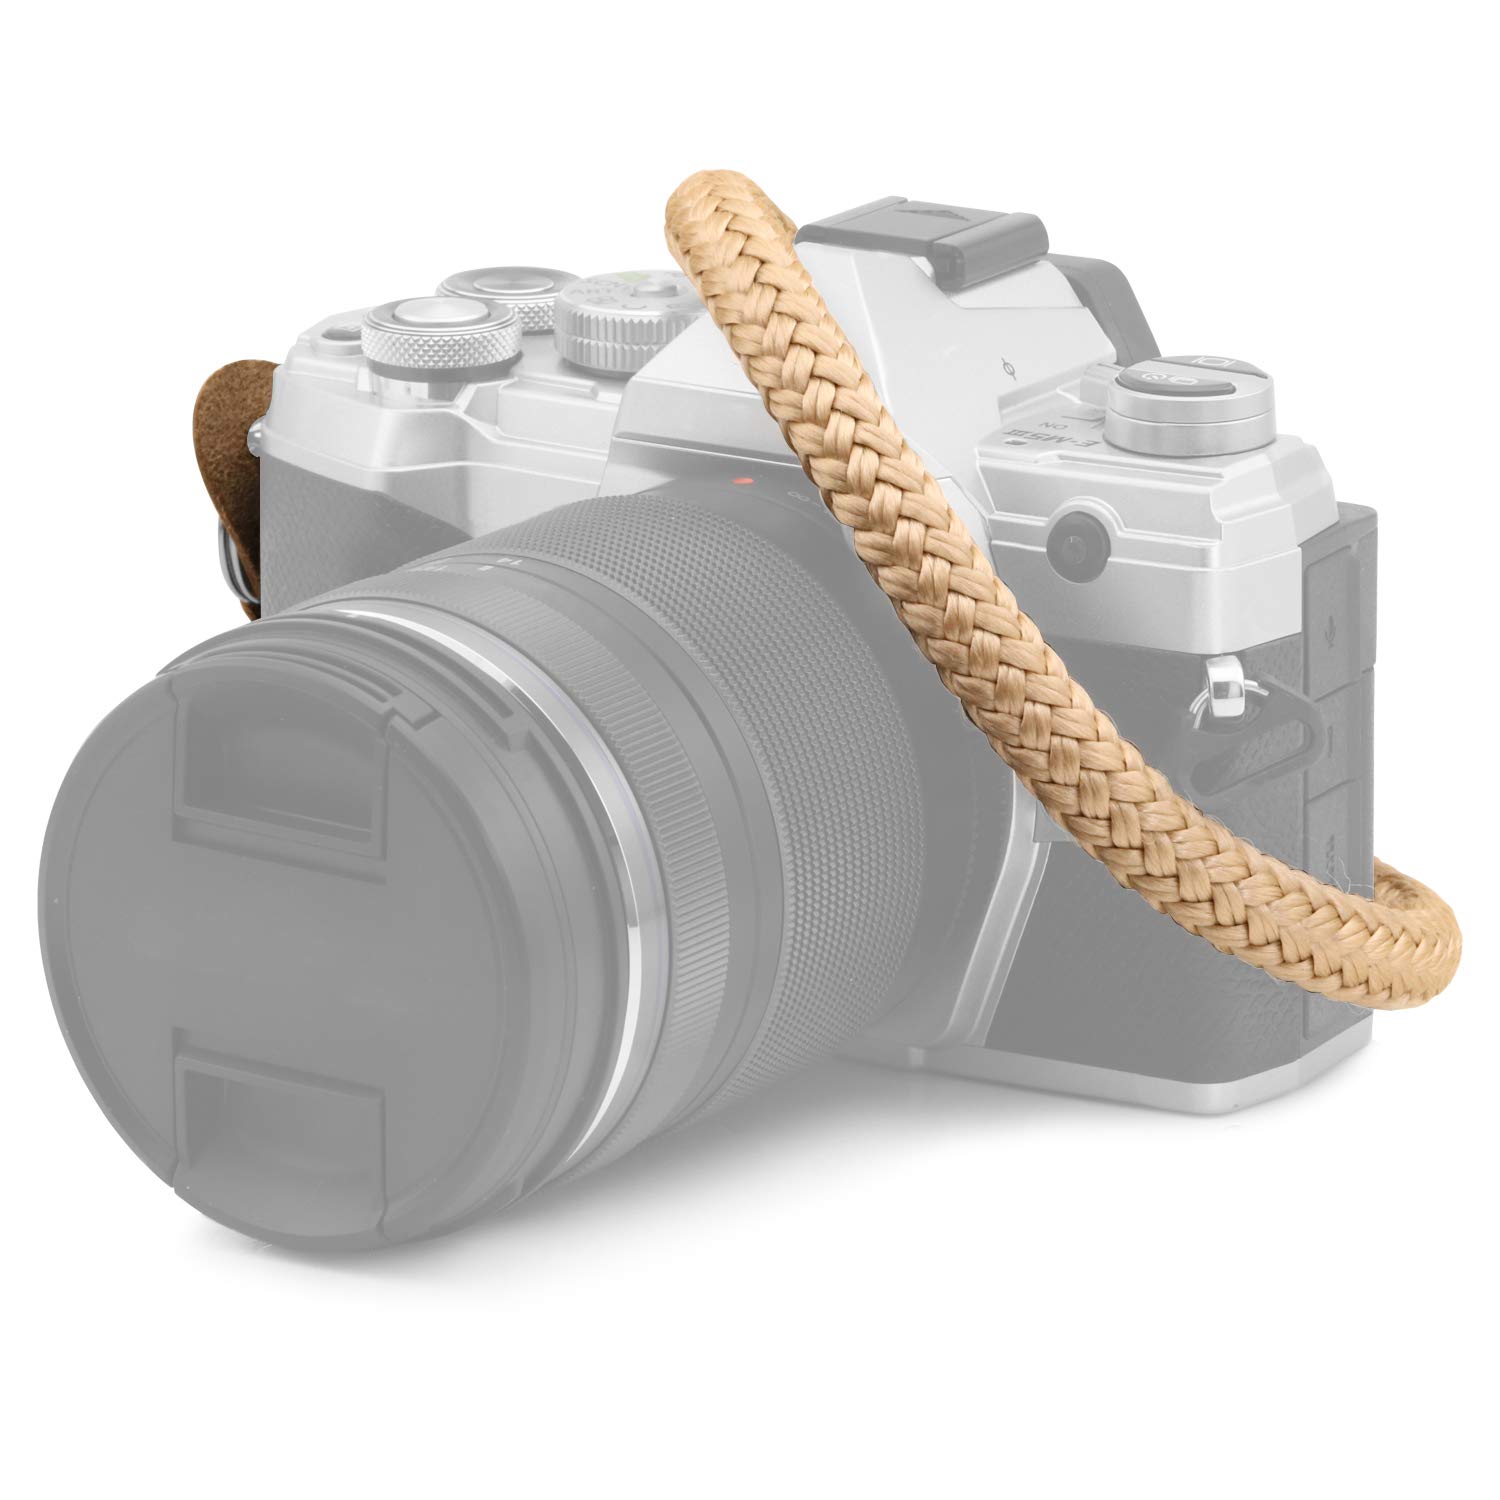 MegaGear SLR, DSLR Camera Cotton Wrist Strap (Model: MG1782), Mink